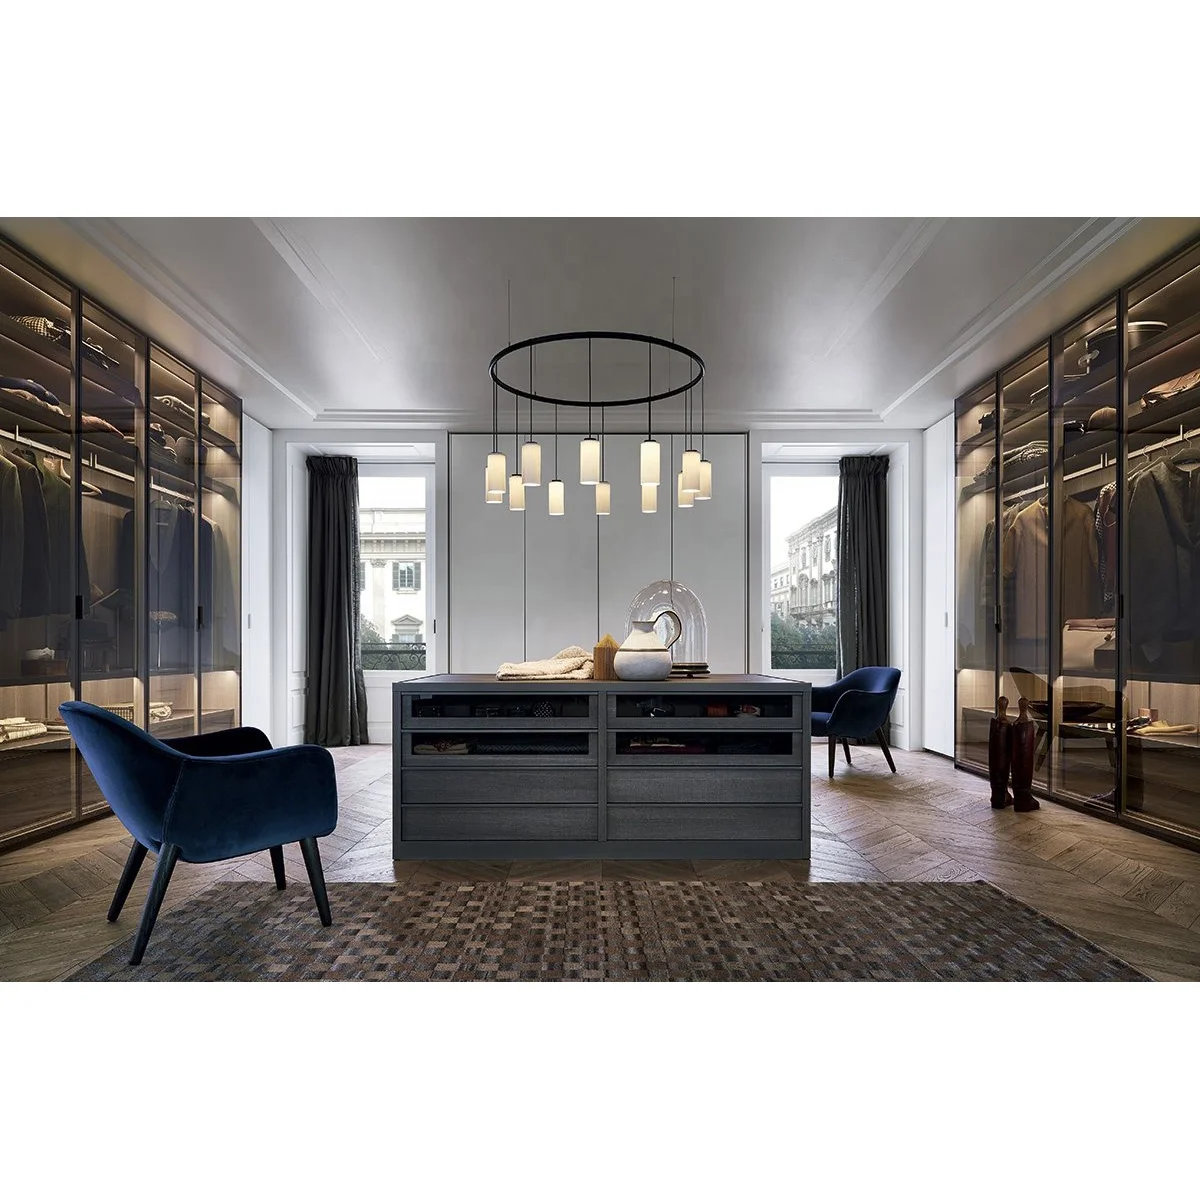 C&YCABINET RTS Italian Design Glass Door Plywood Melamine Carcass Luxury LED Light Walk in Closet Wardrobe